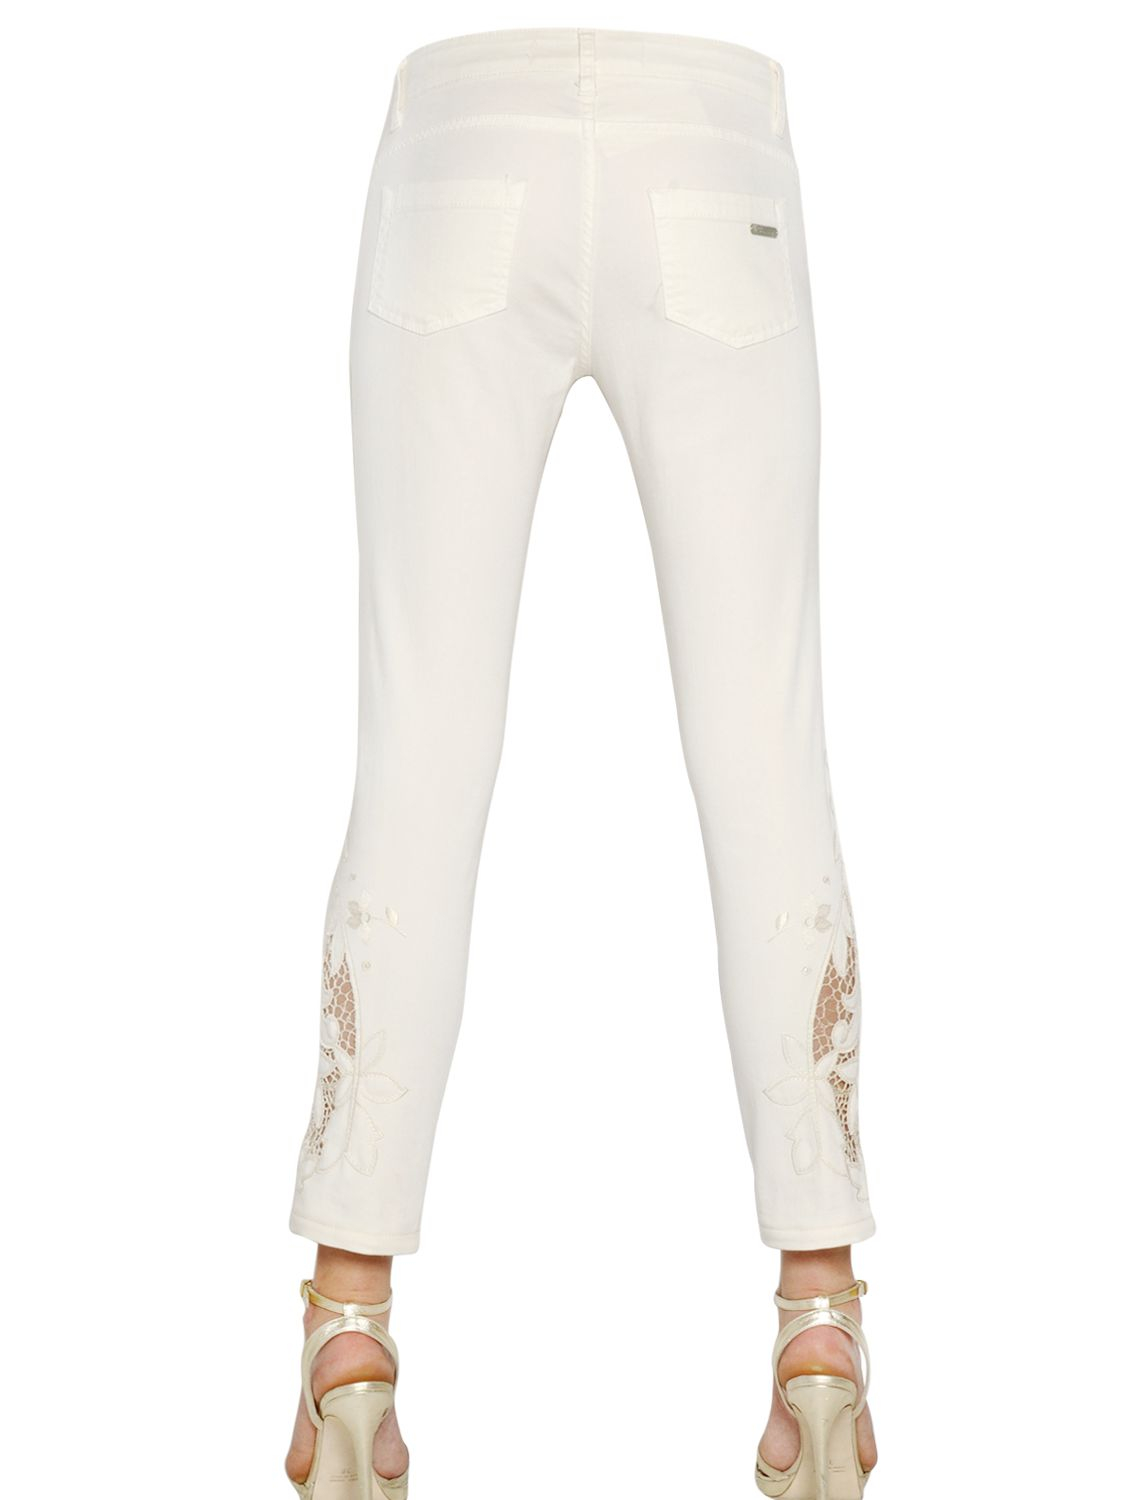 Blumarine Lace Insert Cotton Denim Jeans in Ivory (White) - Lyst